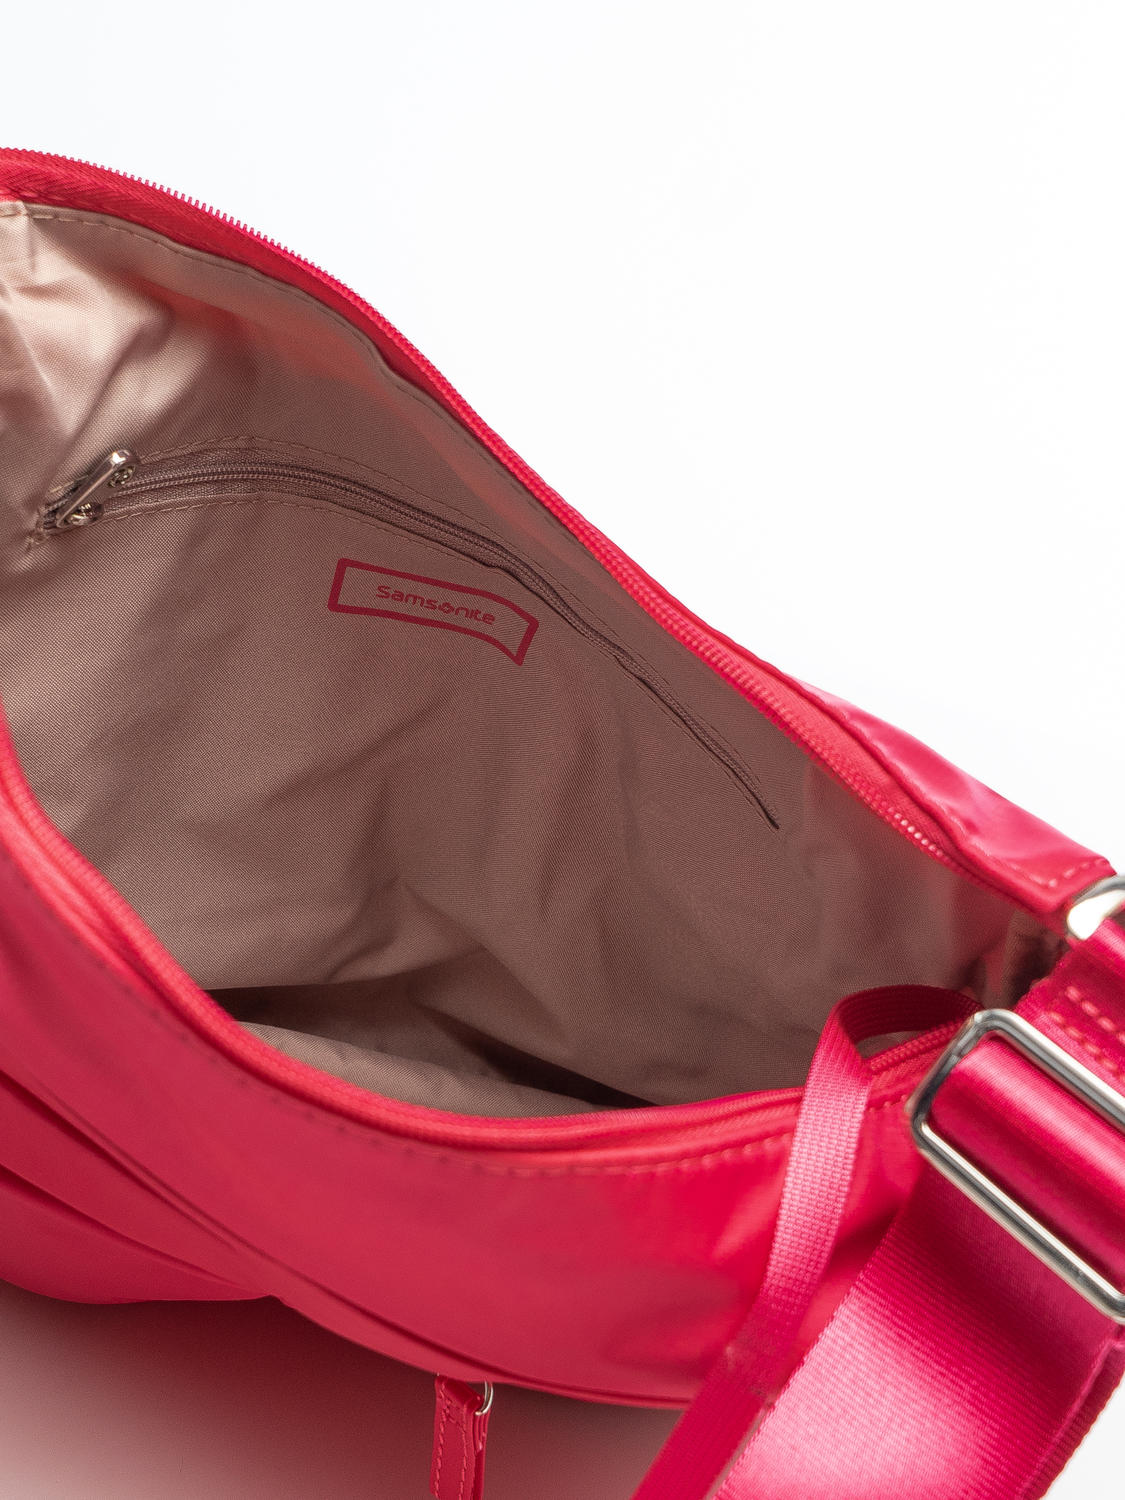 Bolso de tela grande con cremallera, rojo frambuesa.